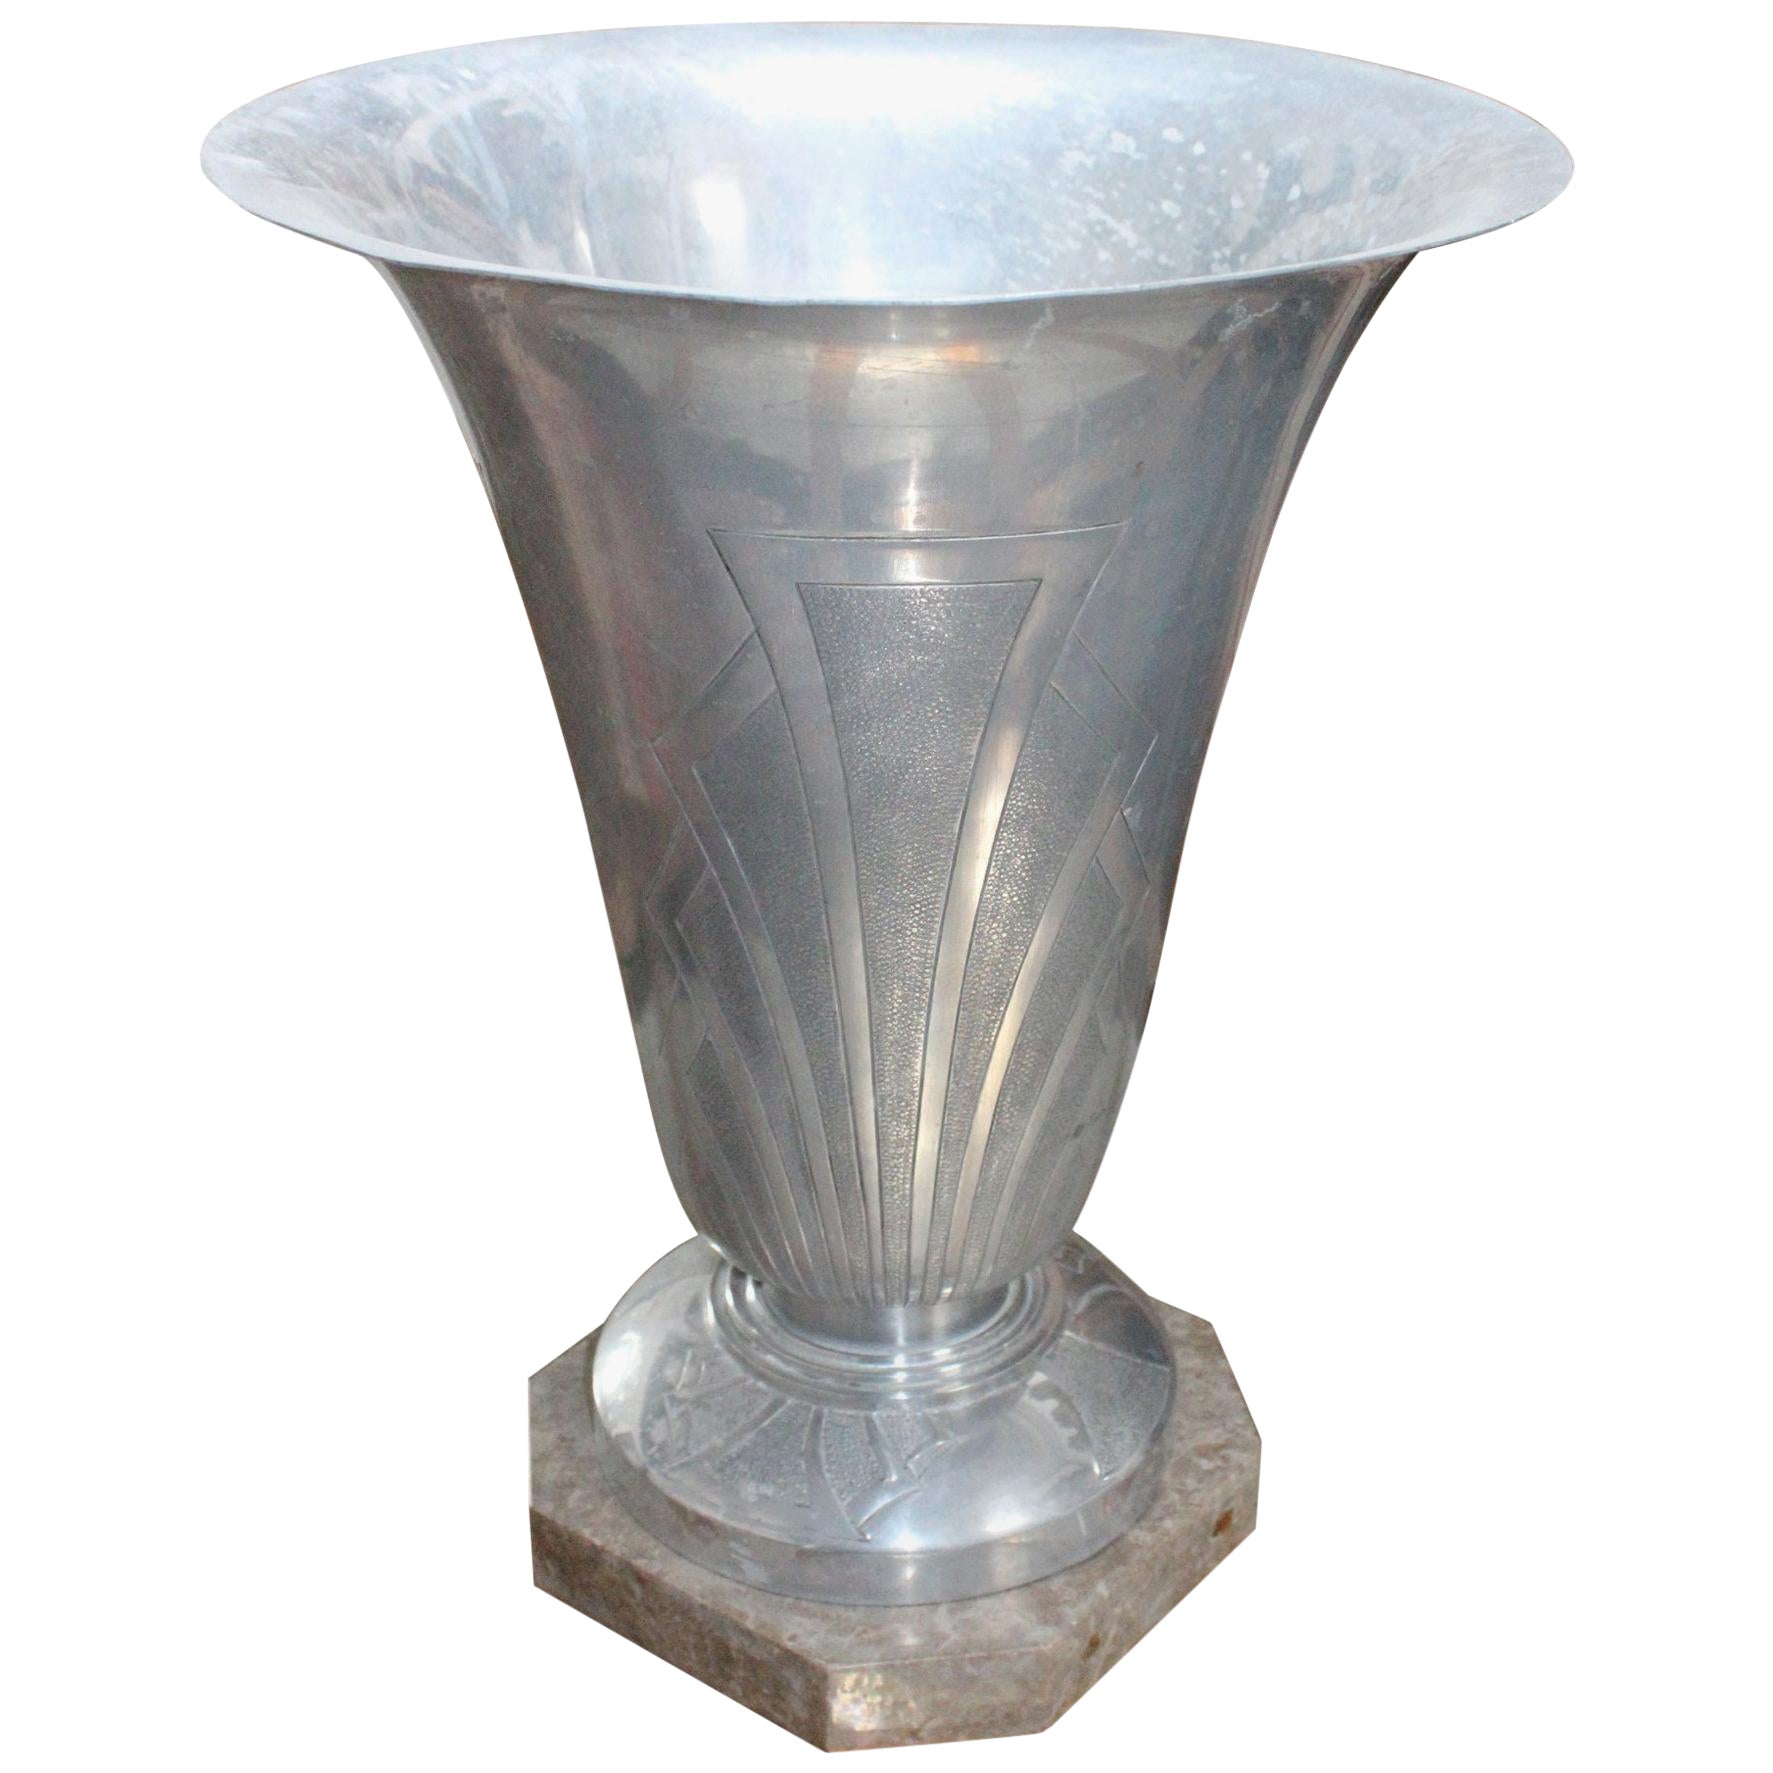 1920s English Art Deco Aluminium Lamp with Marble Base